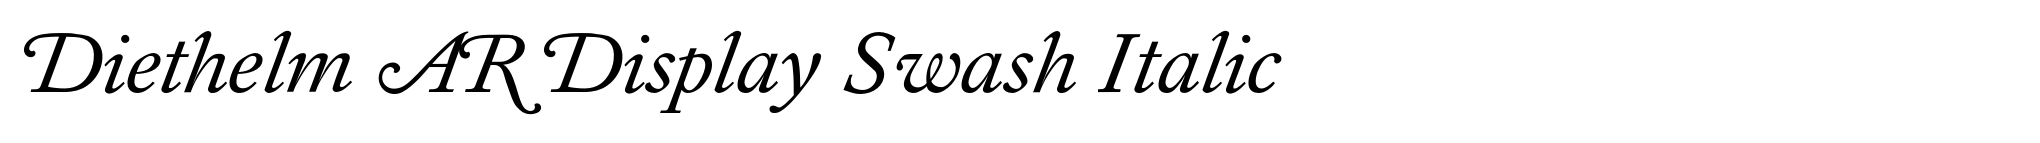 Diethelm AR Display Swash Italic image